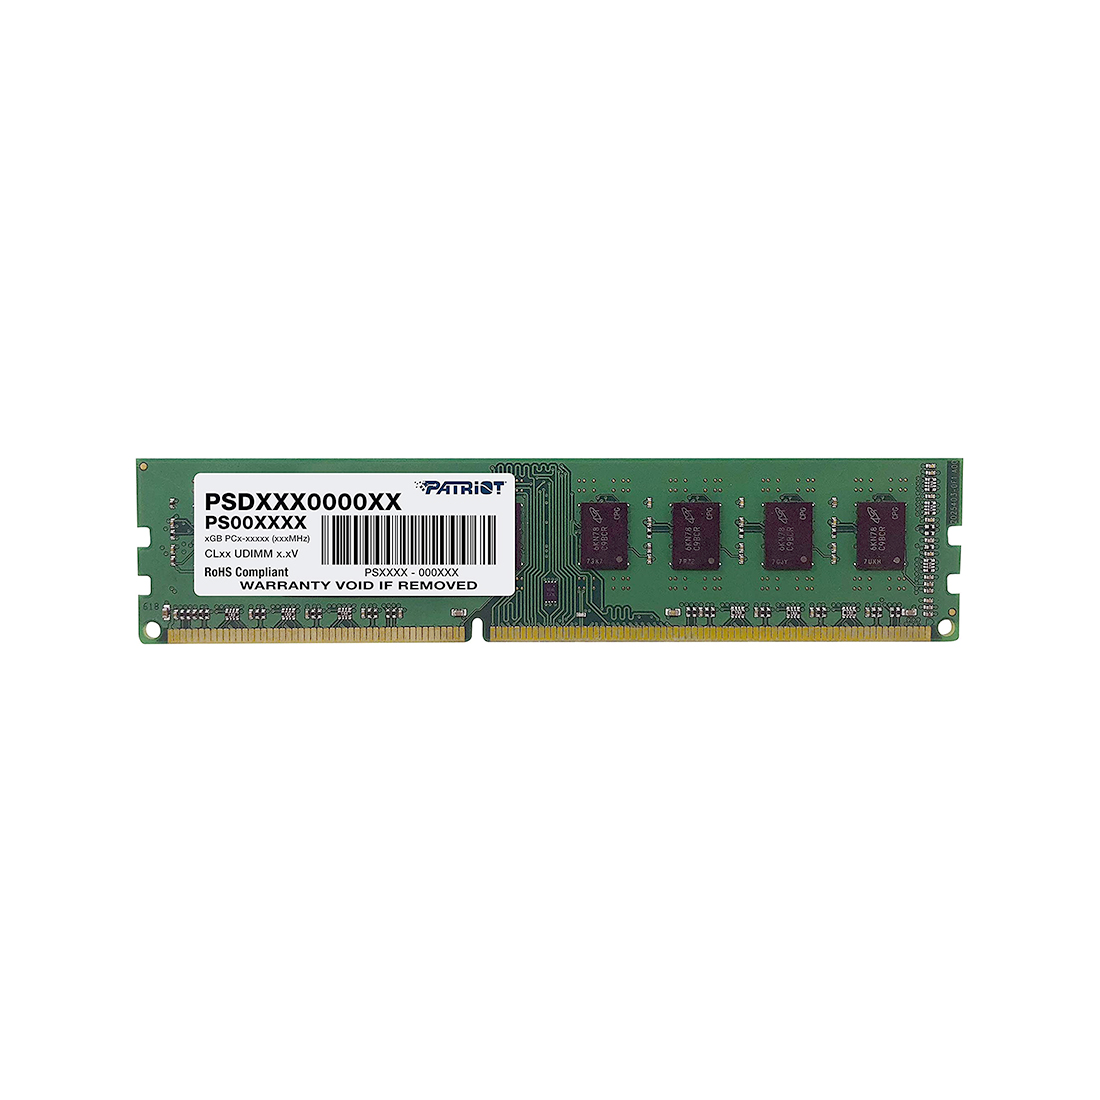 Модуль памяти Patriot Signature PSD34G16002 DDR3 4GB 1600MHz